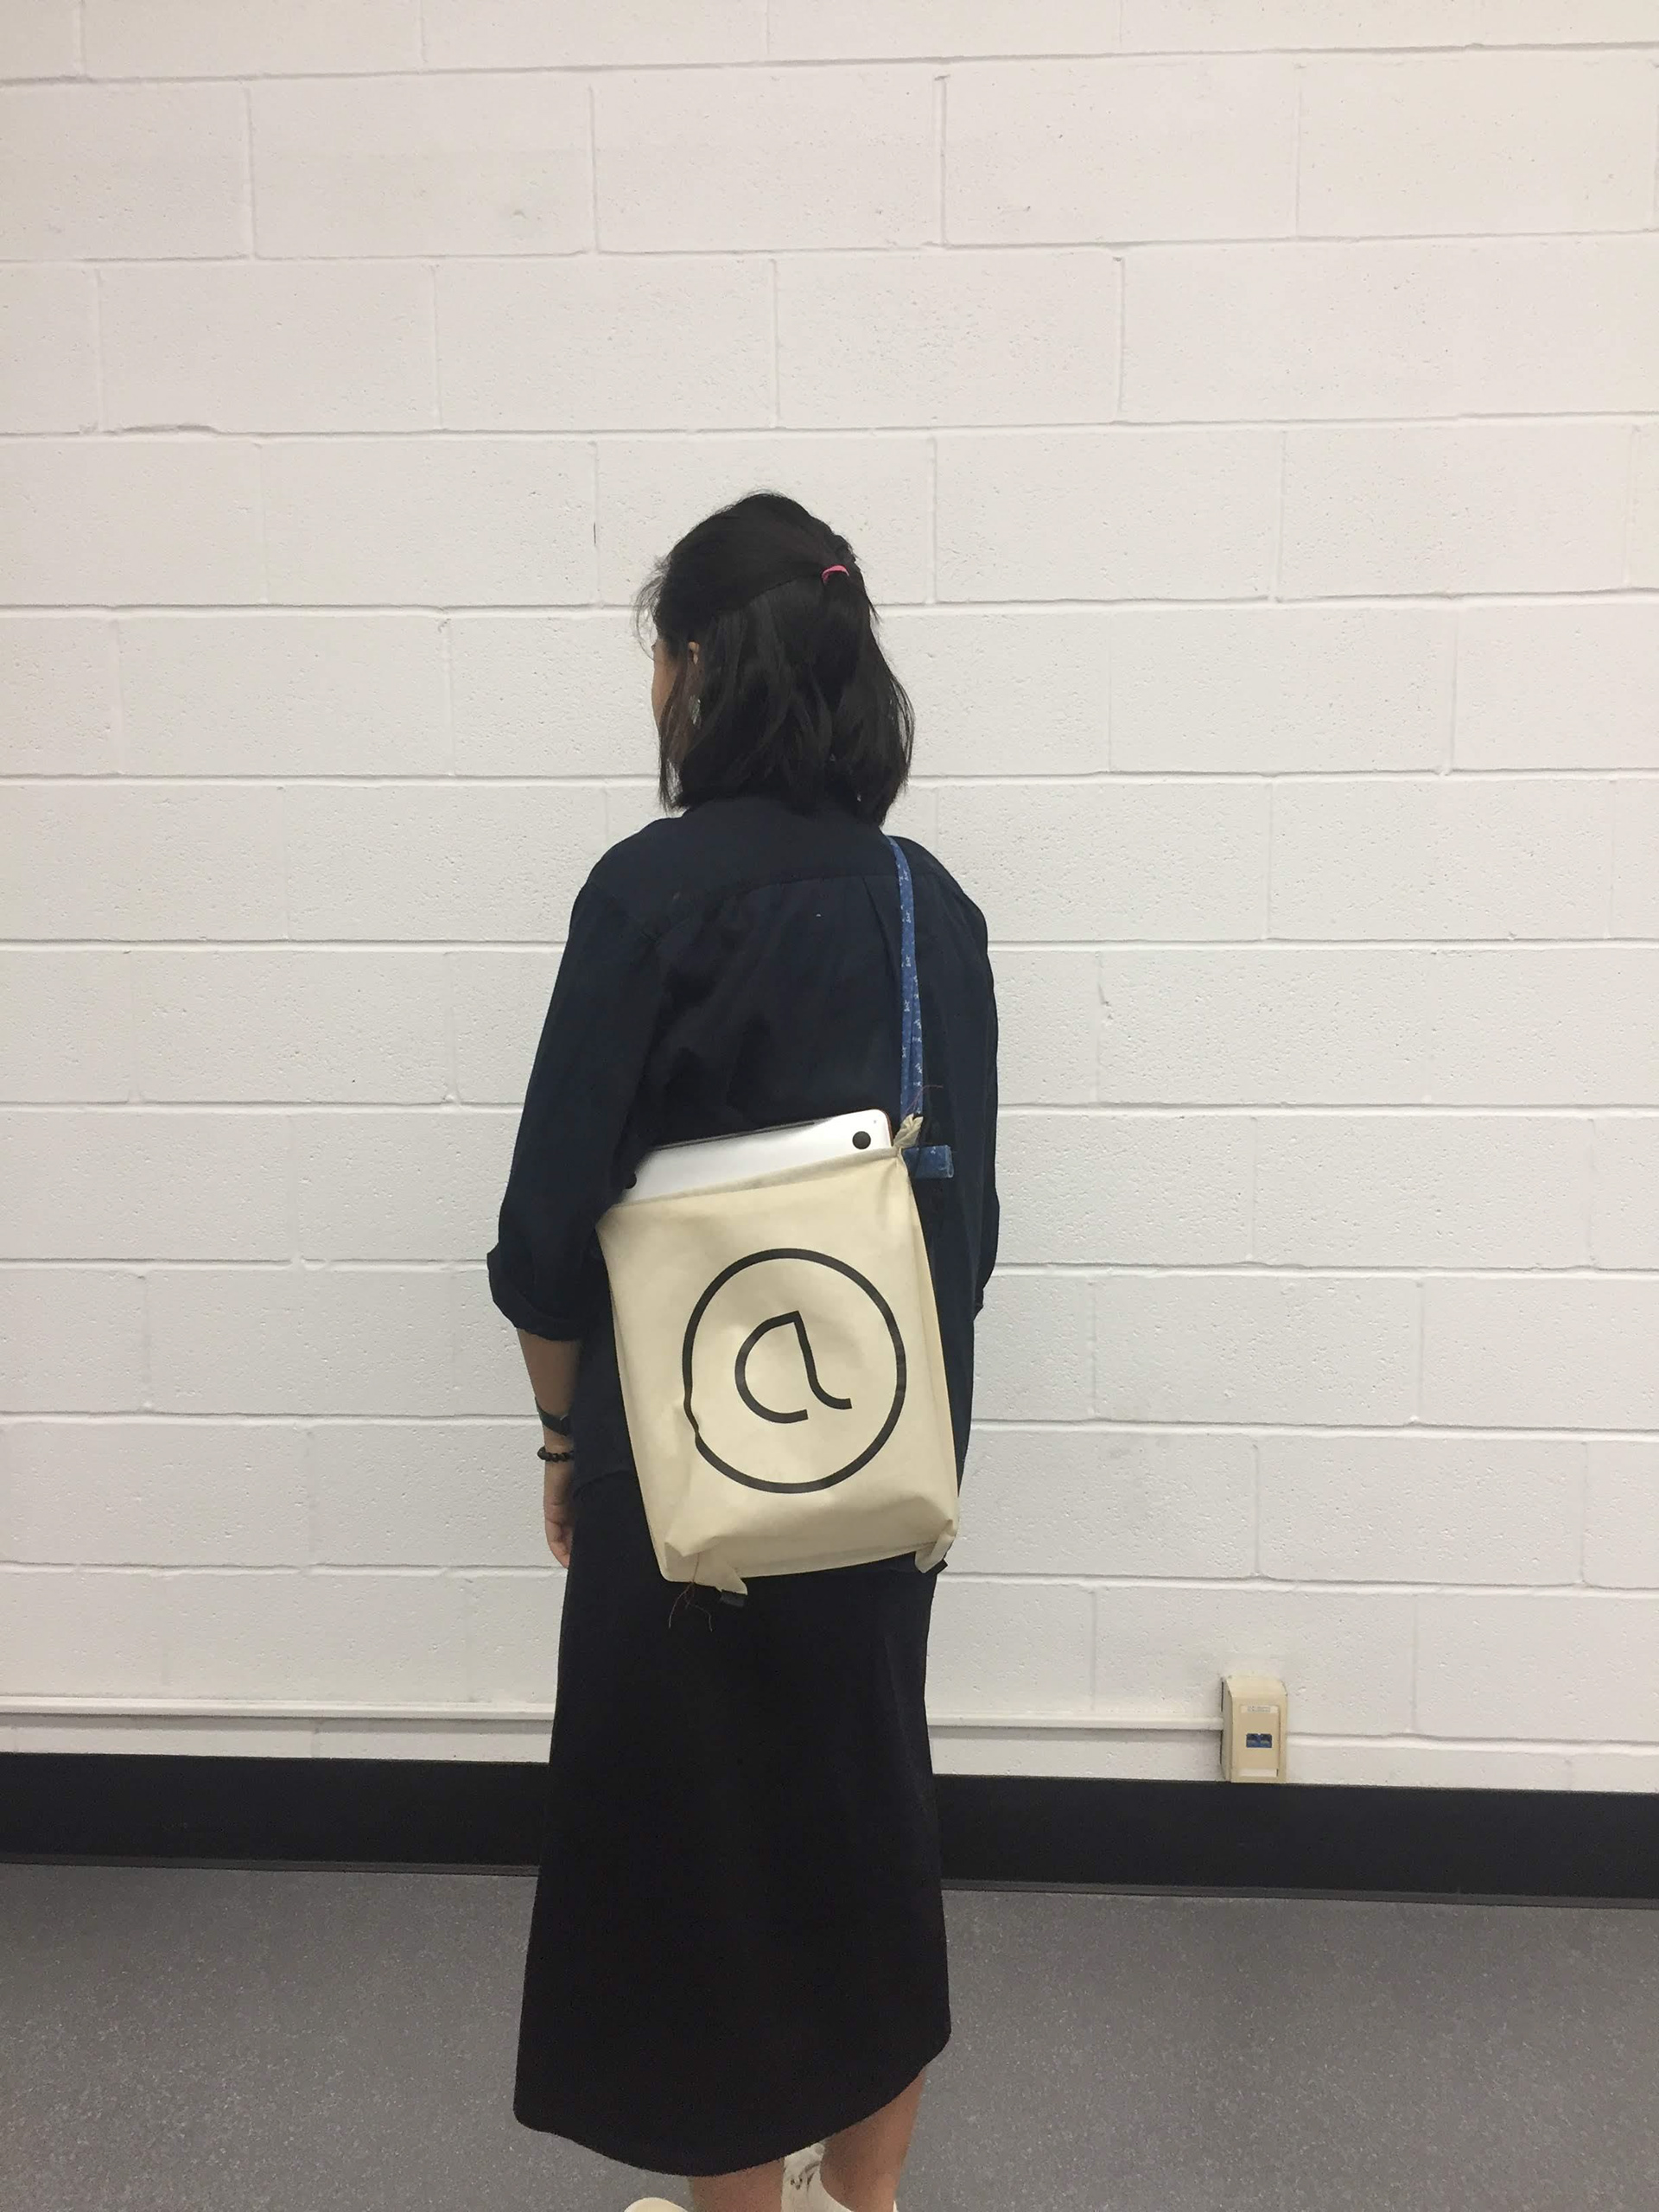 Mizuka Bazooka - Minimalist Messenger Bag Design